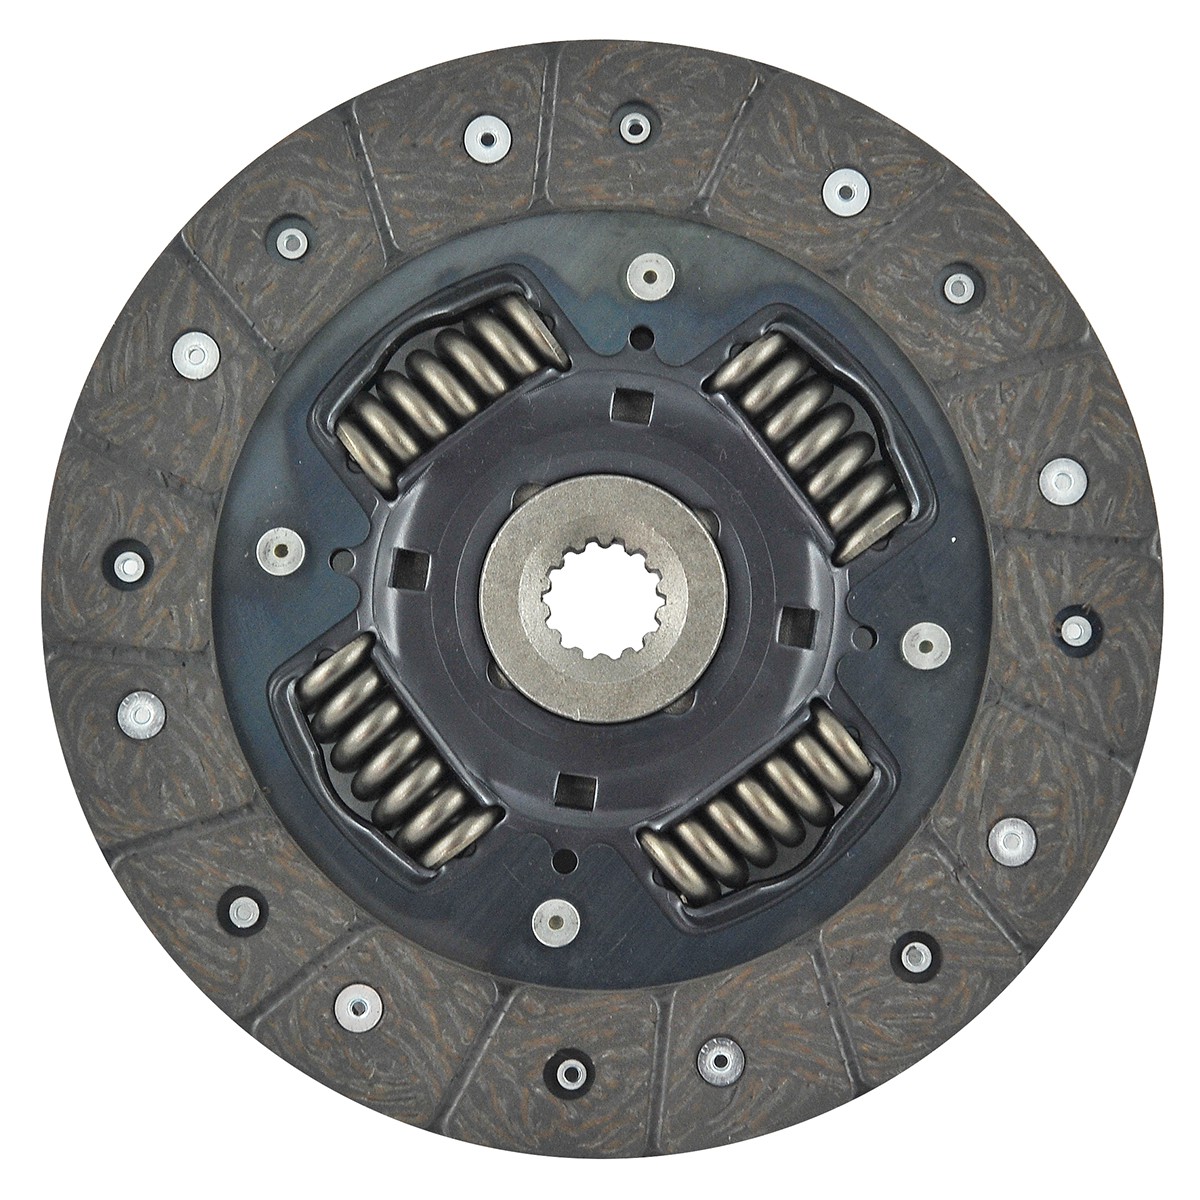 Clutch disc 14T / 180 mm / 7-1/8" / Kubota B2440 / 6-05-100-13